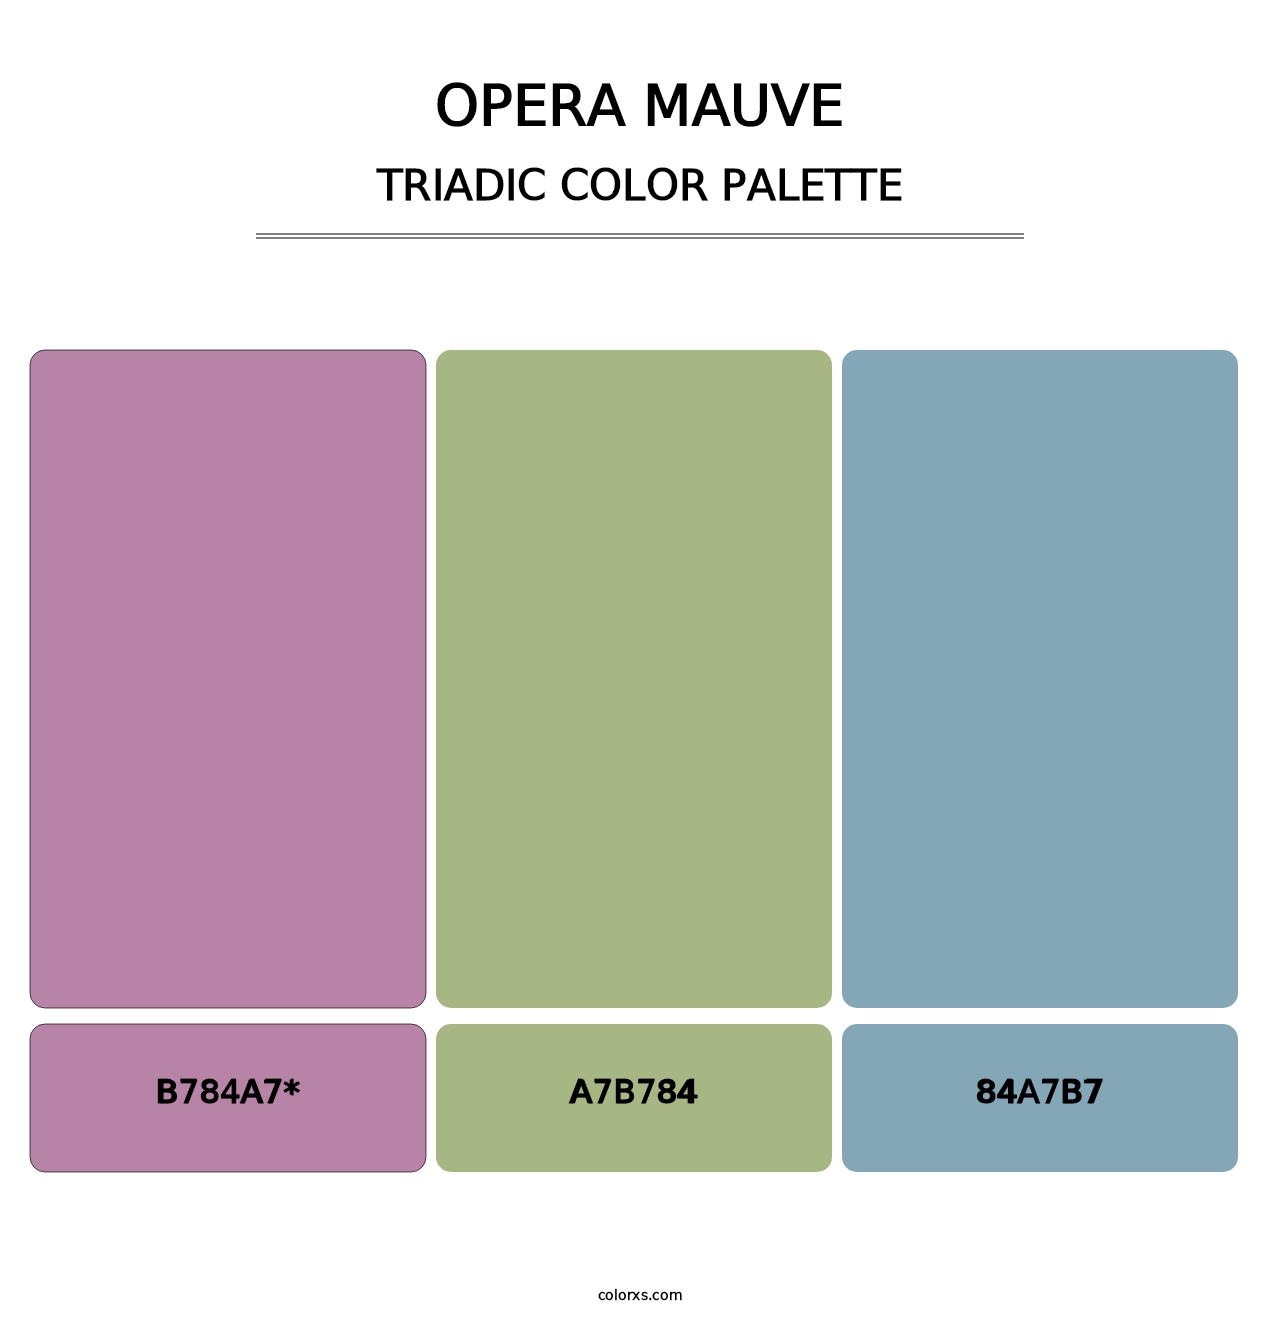 Opera Mauve - Triadic Color Palette